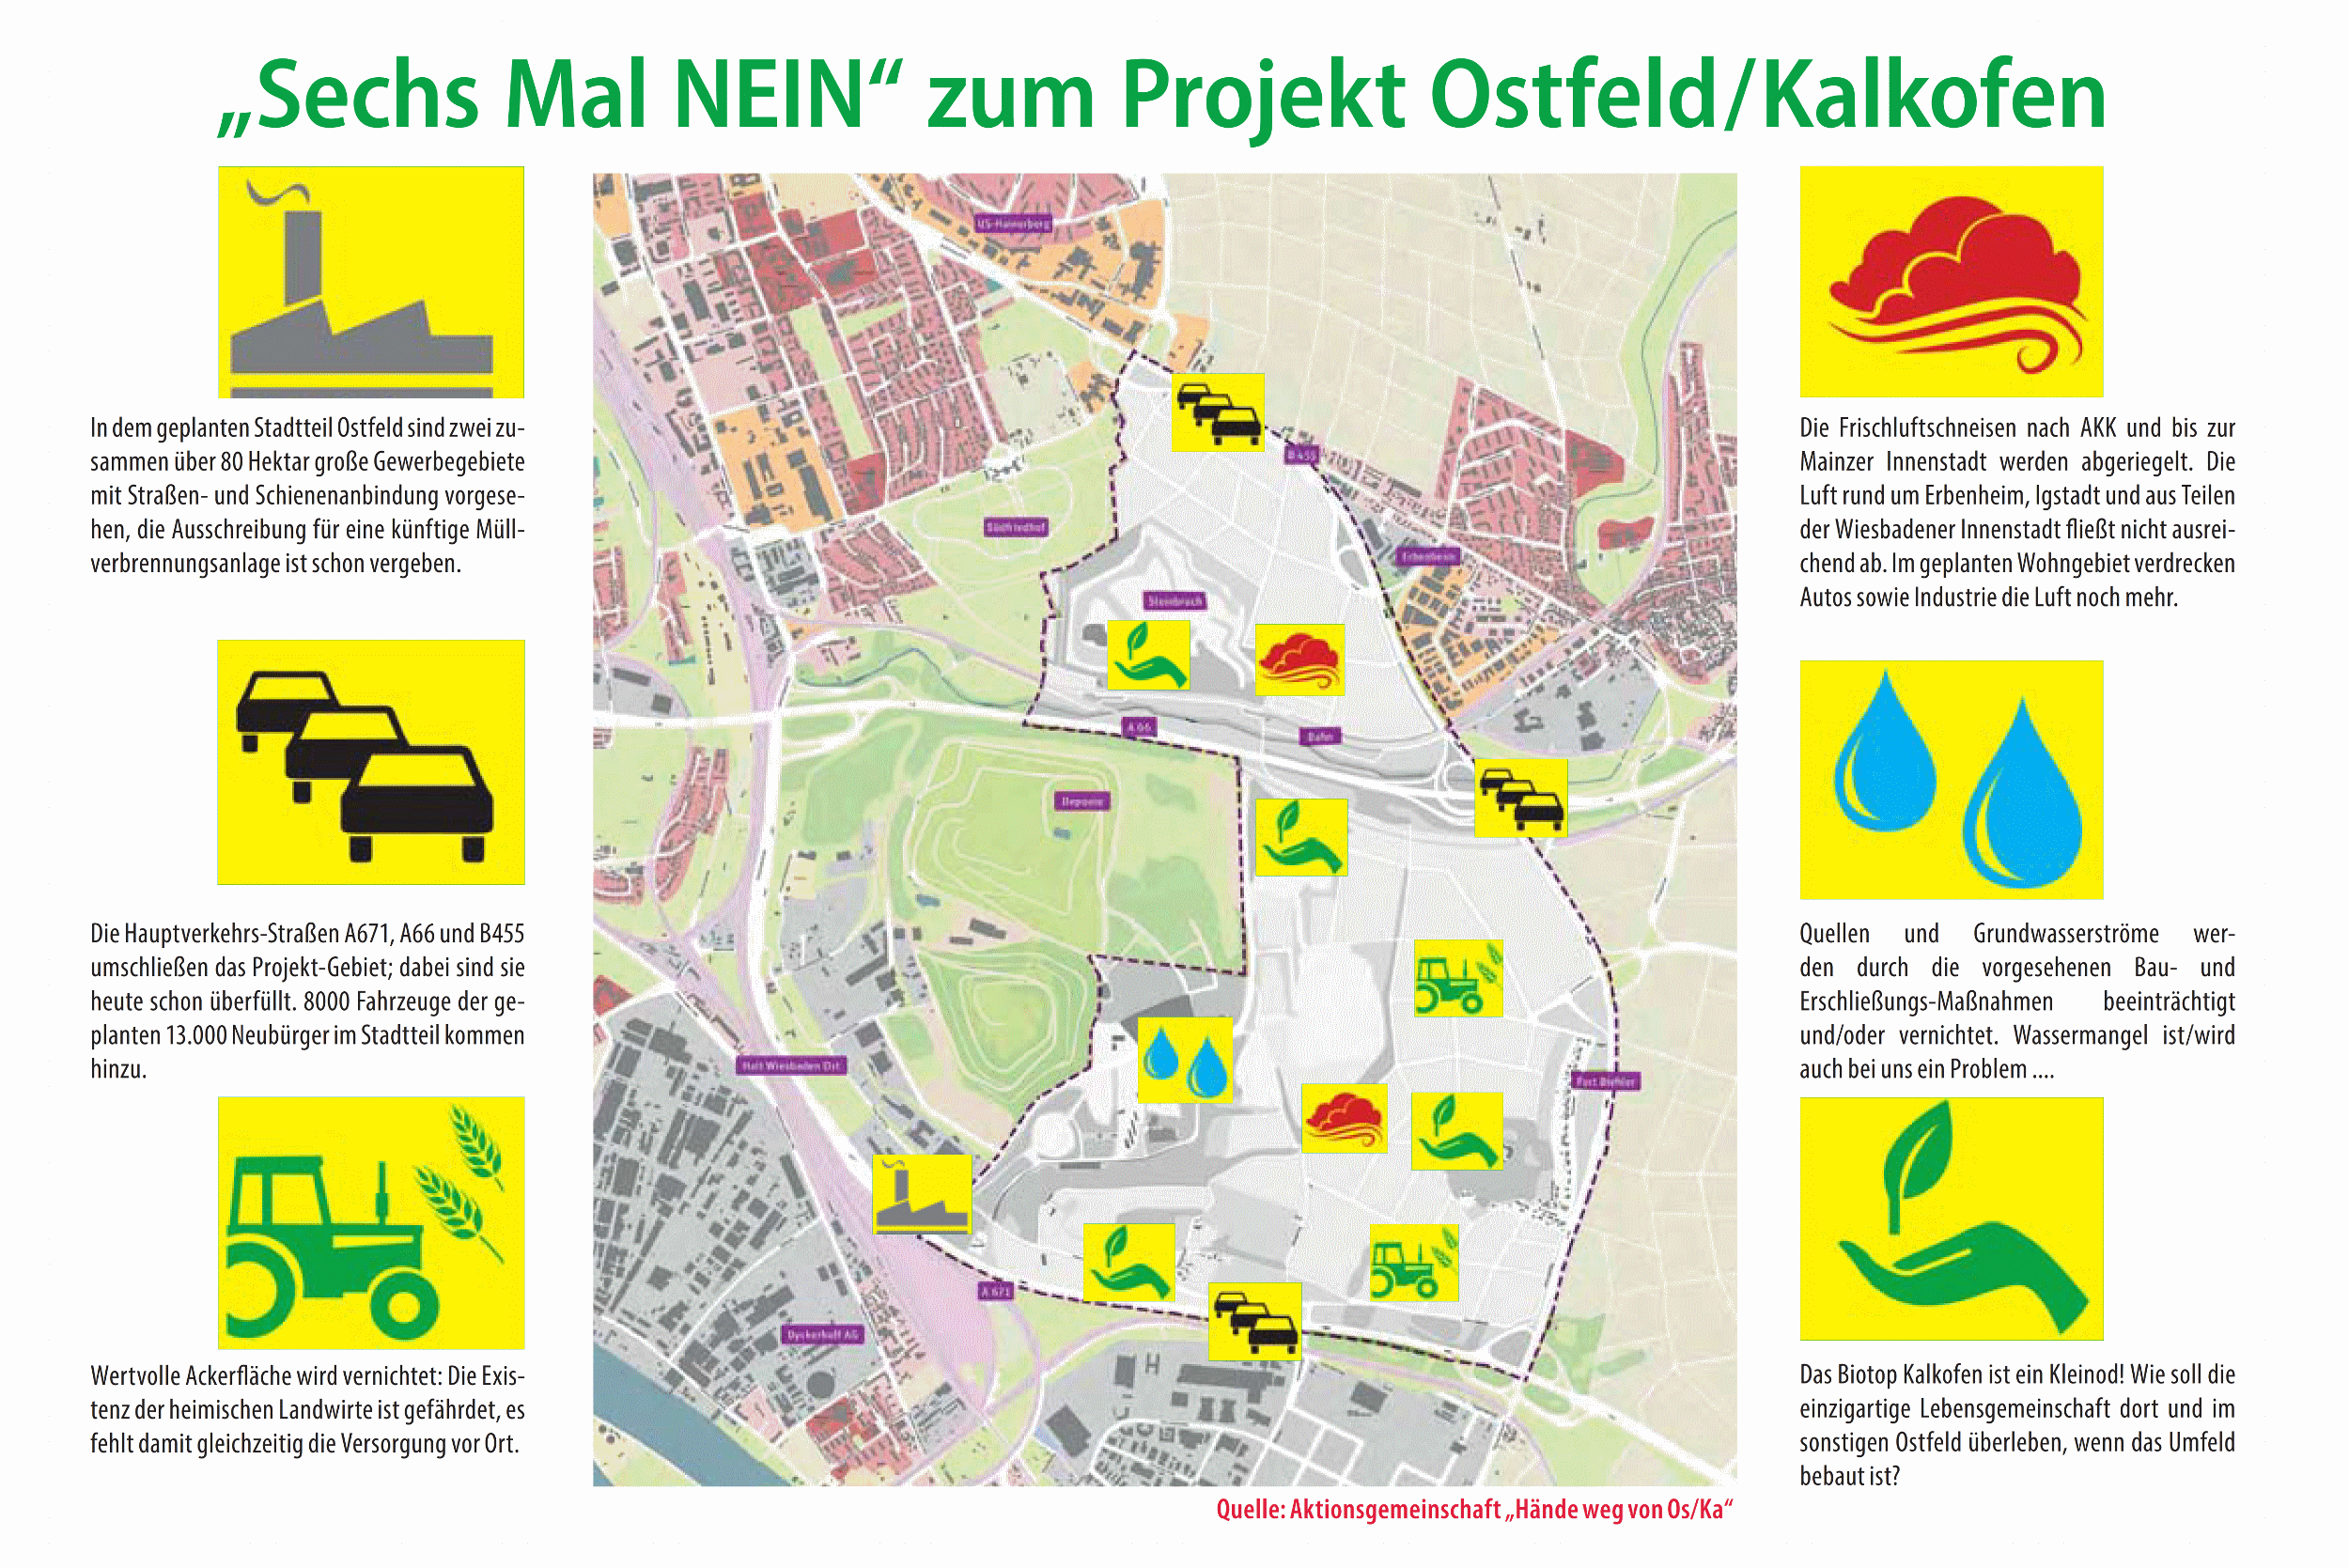 "Sechs Mal Nein" zum Projekt Ostfeld-Kalkofen